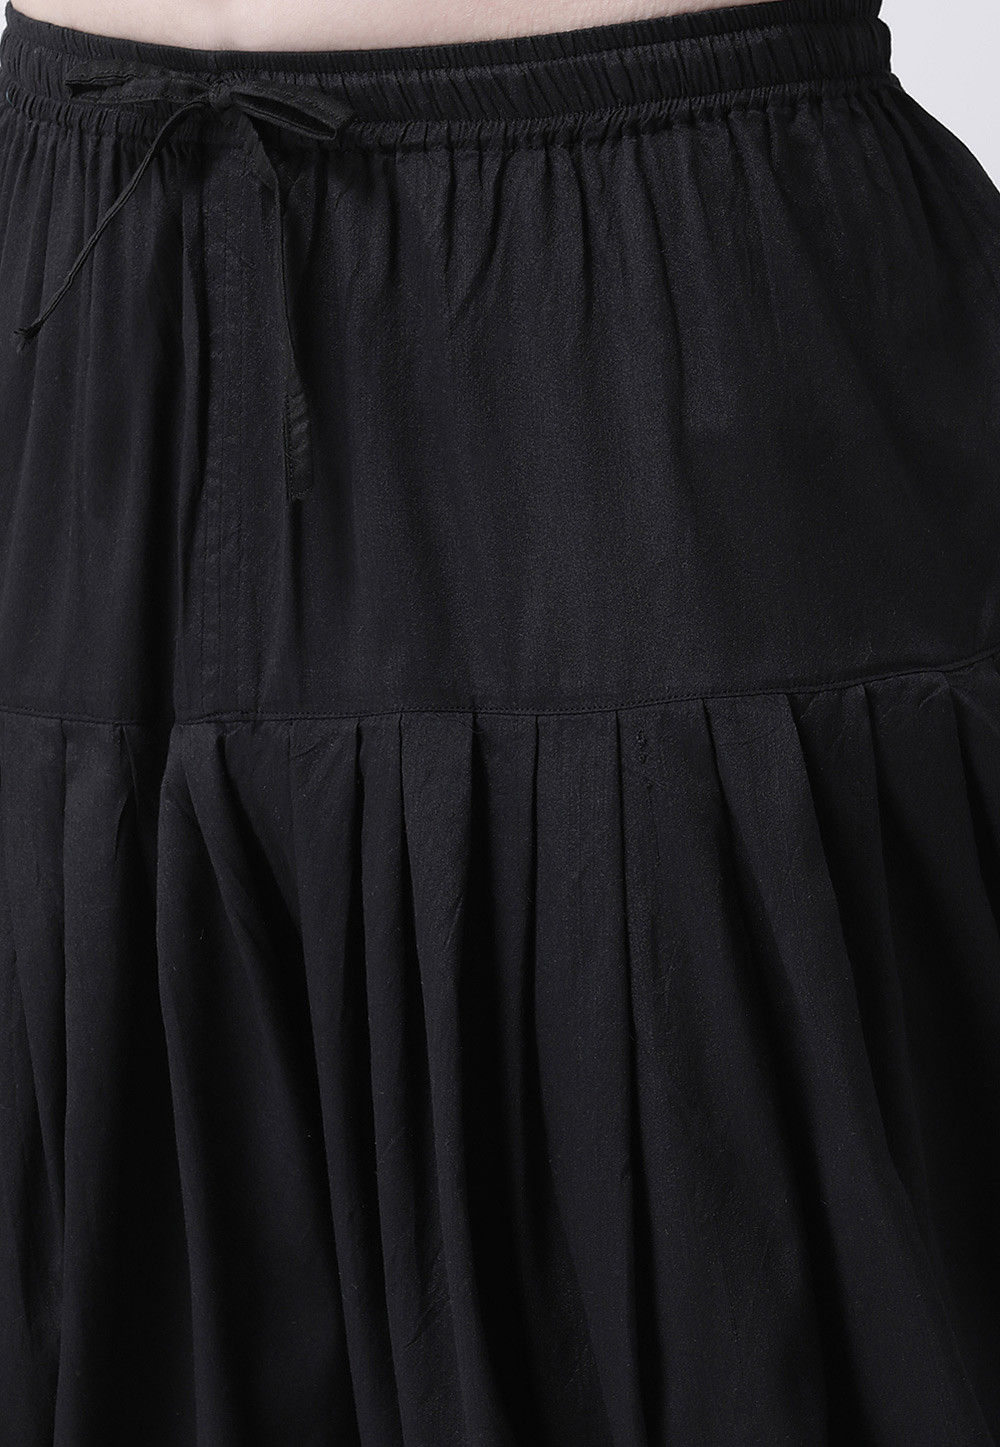 Buy Printed Cotton Dhoti Kurta in Black Online : MGN154 - Utsav Fashion